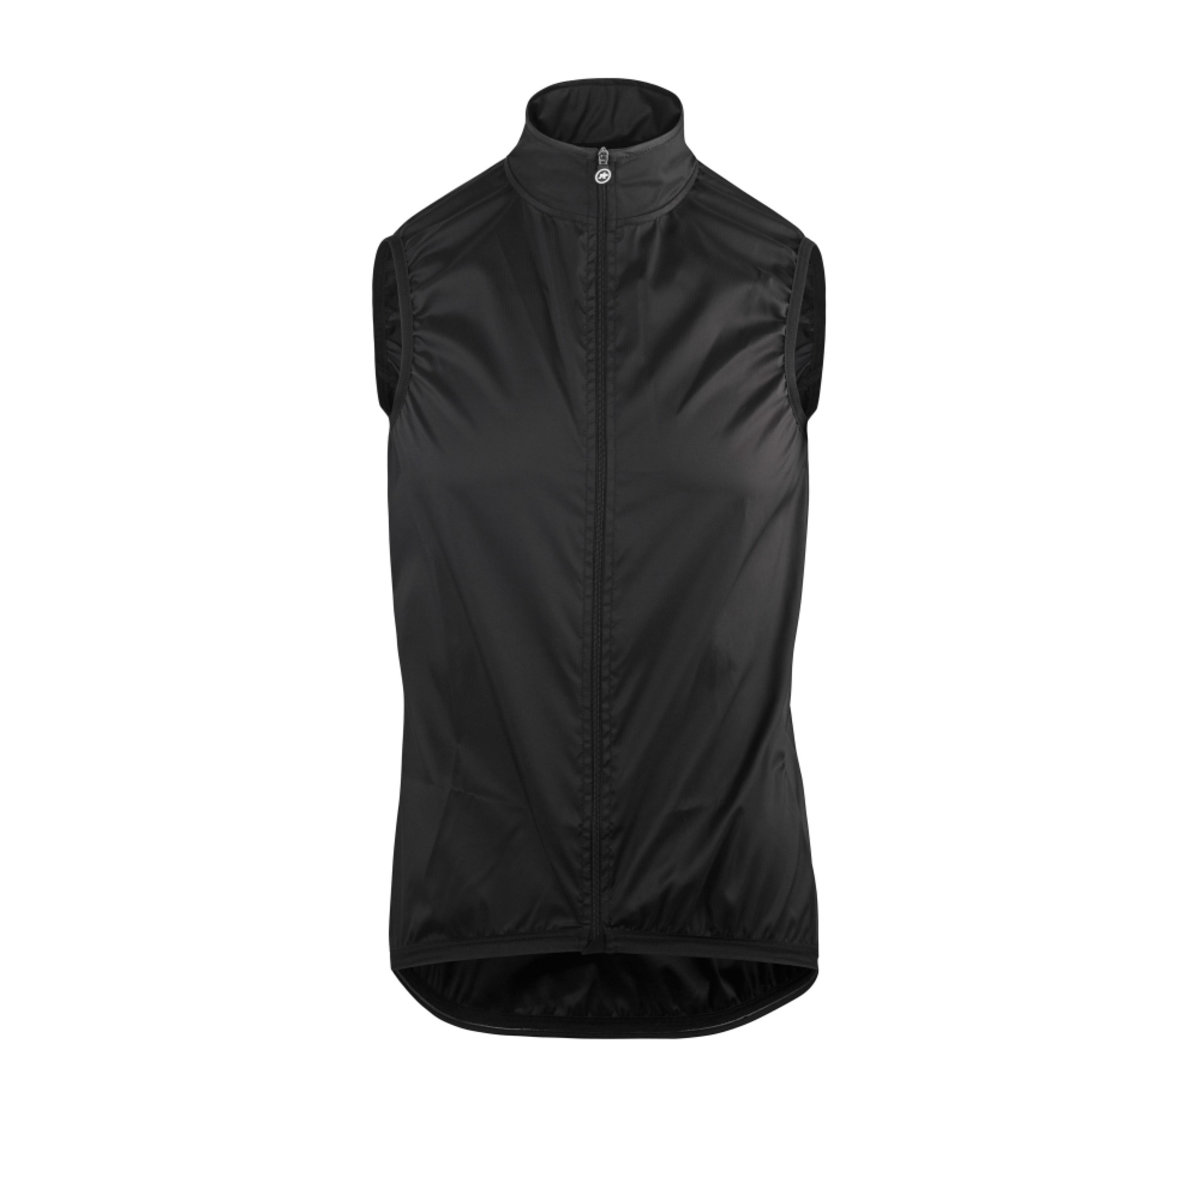 Жилетка ASSOS Mille GT Wind Vest Black Series, мужская, черная, XLG фото 